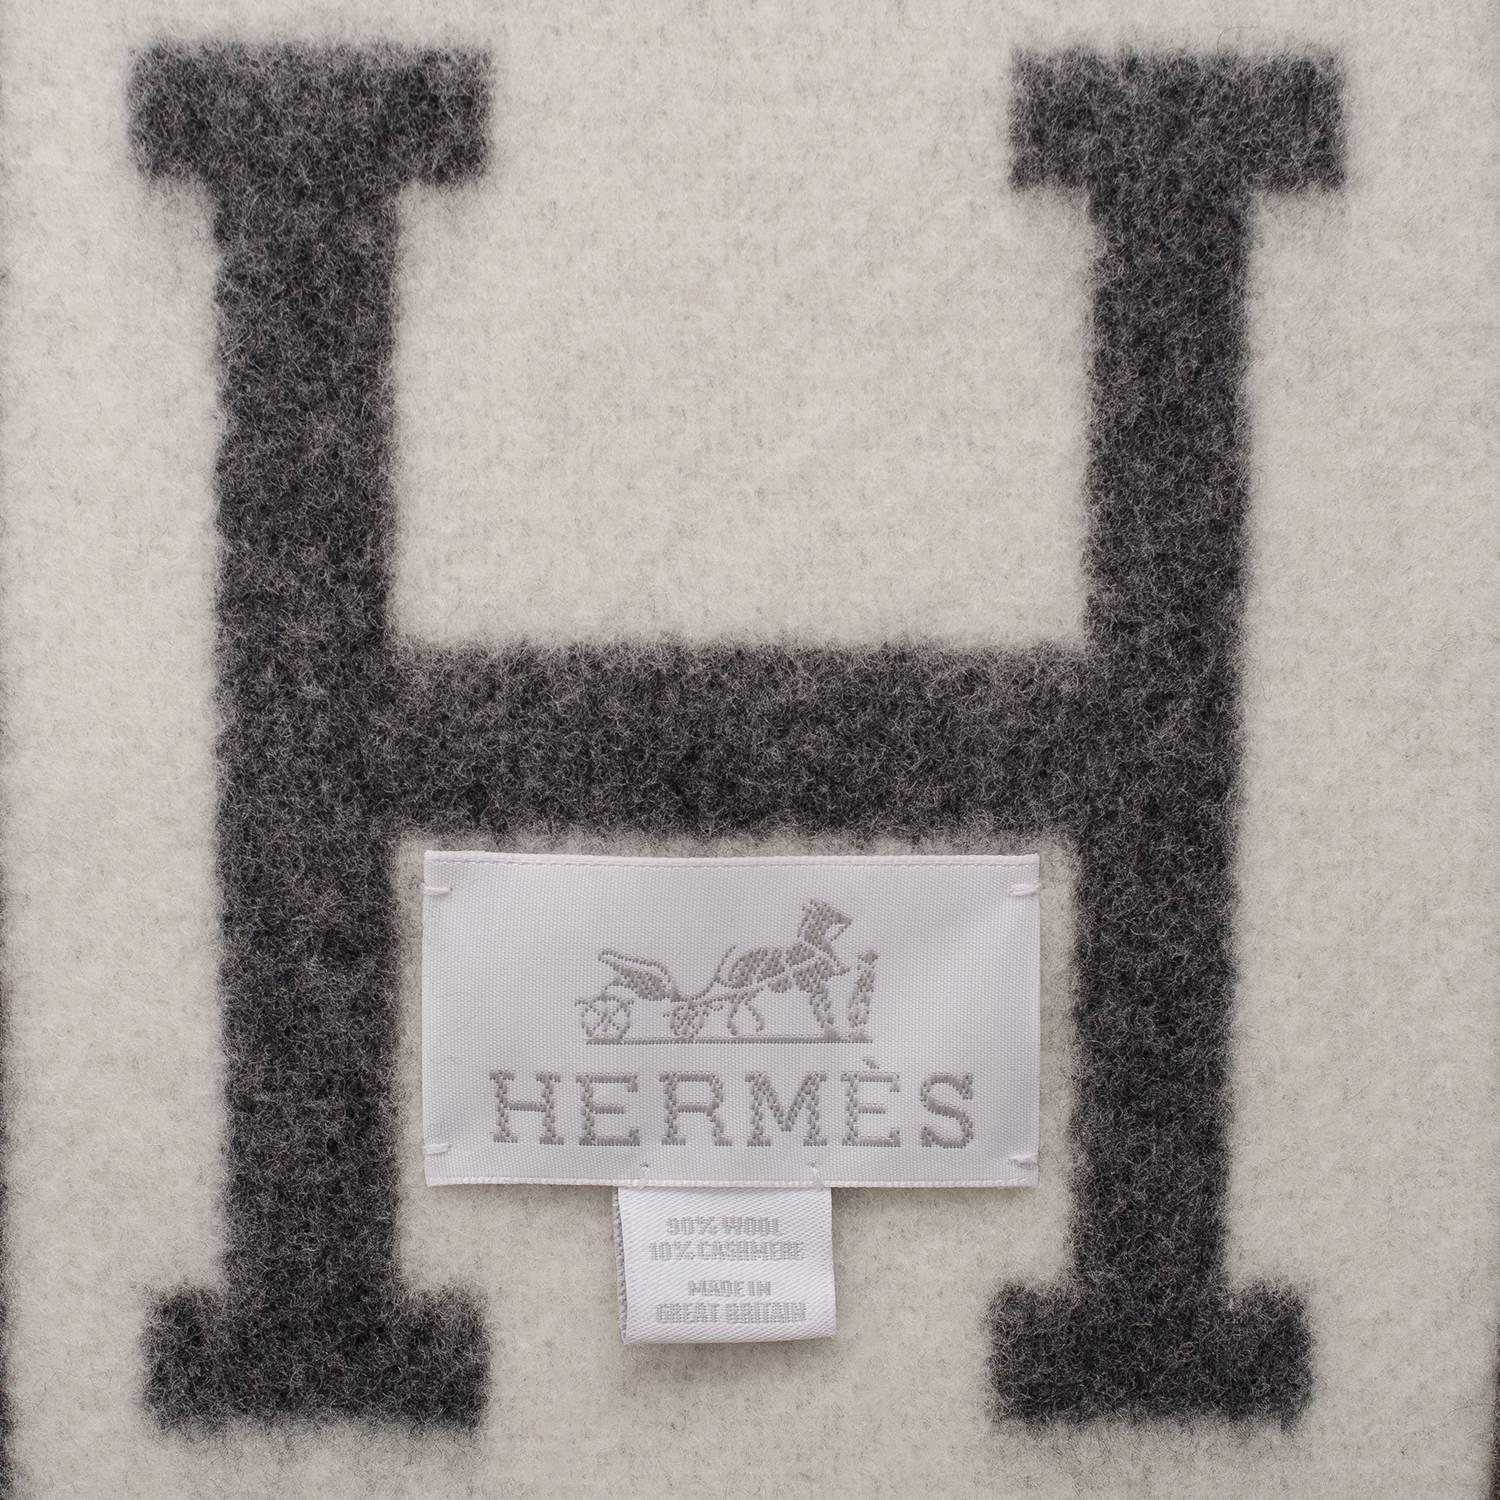 Hermes Avalon Signature H blanket in ecru/dark grey.

The Avalon Signature H blanket is made of 90% wool, 10% cashmere.

The blanket measures 55